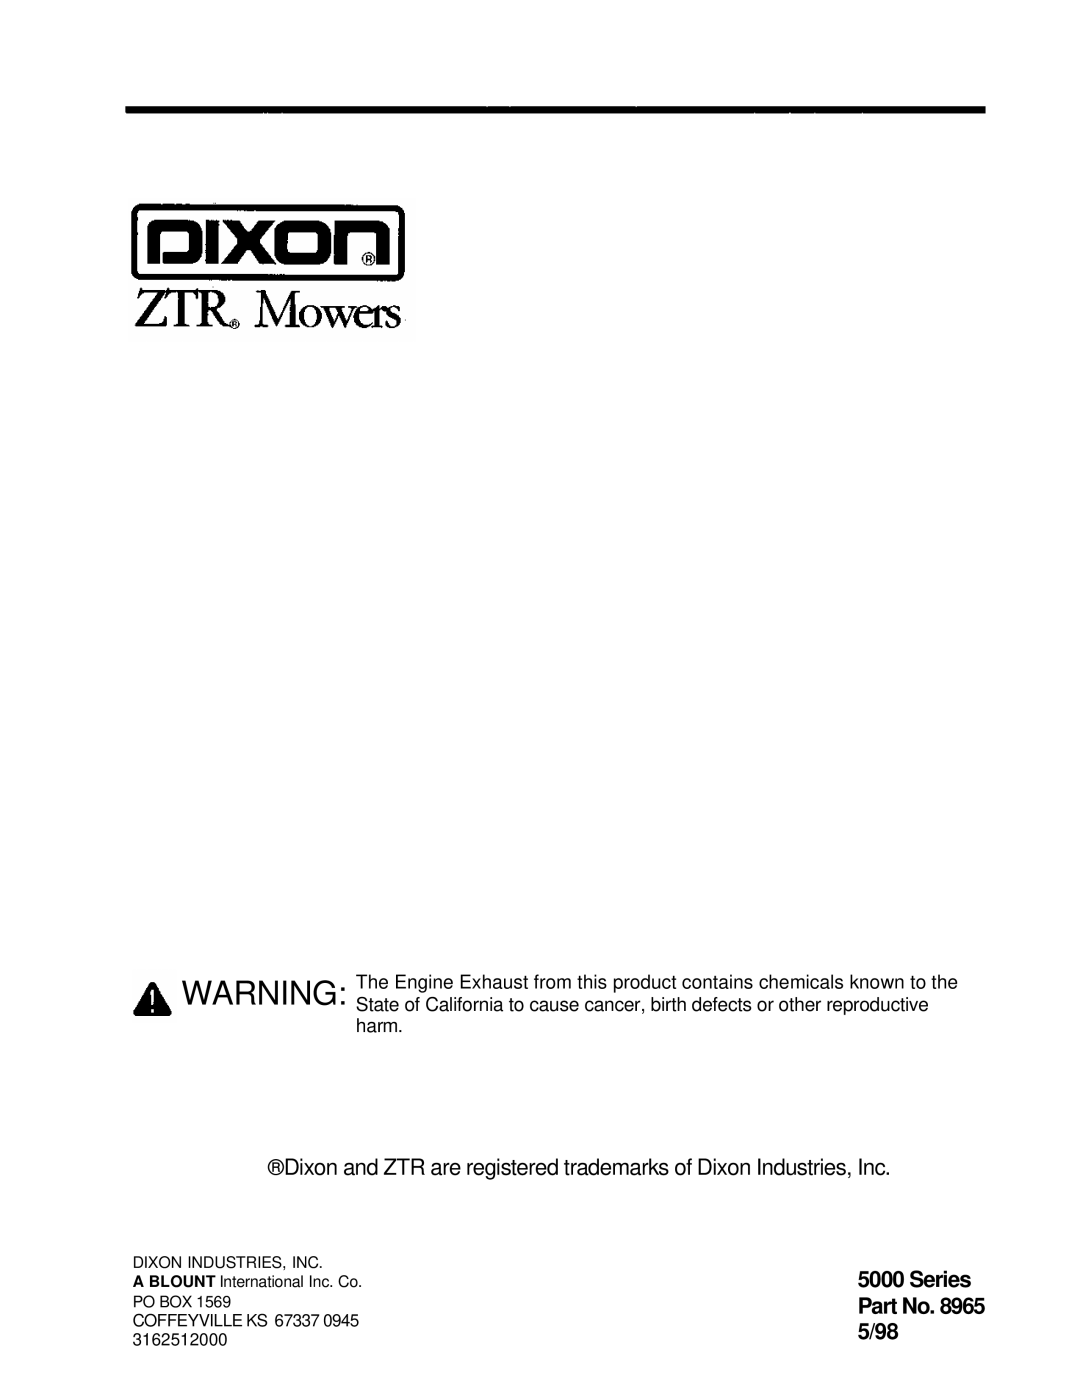 Dixon 5000 Series manual Dixon and ZTR are registered trademarks of Dixon Industries, Inc, Series Part No. 8965 5/98 